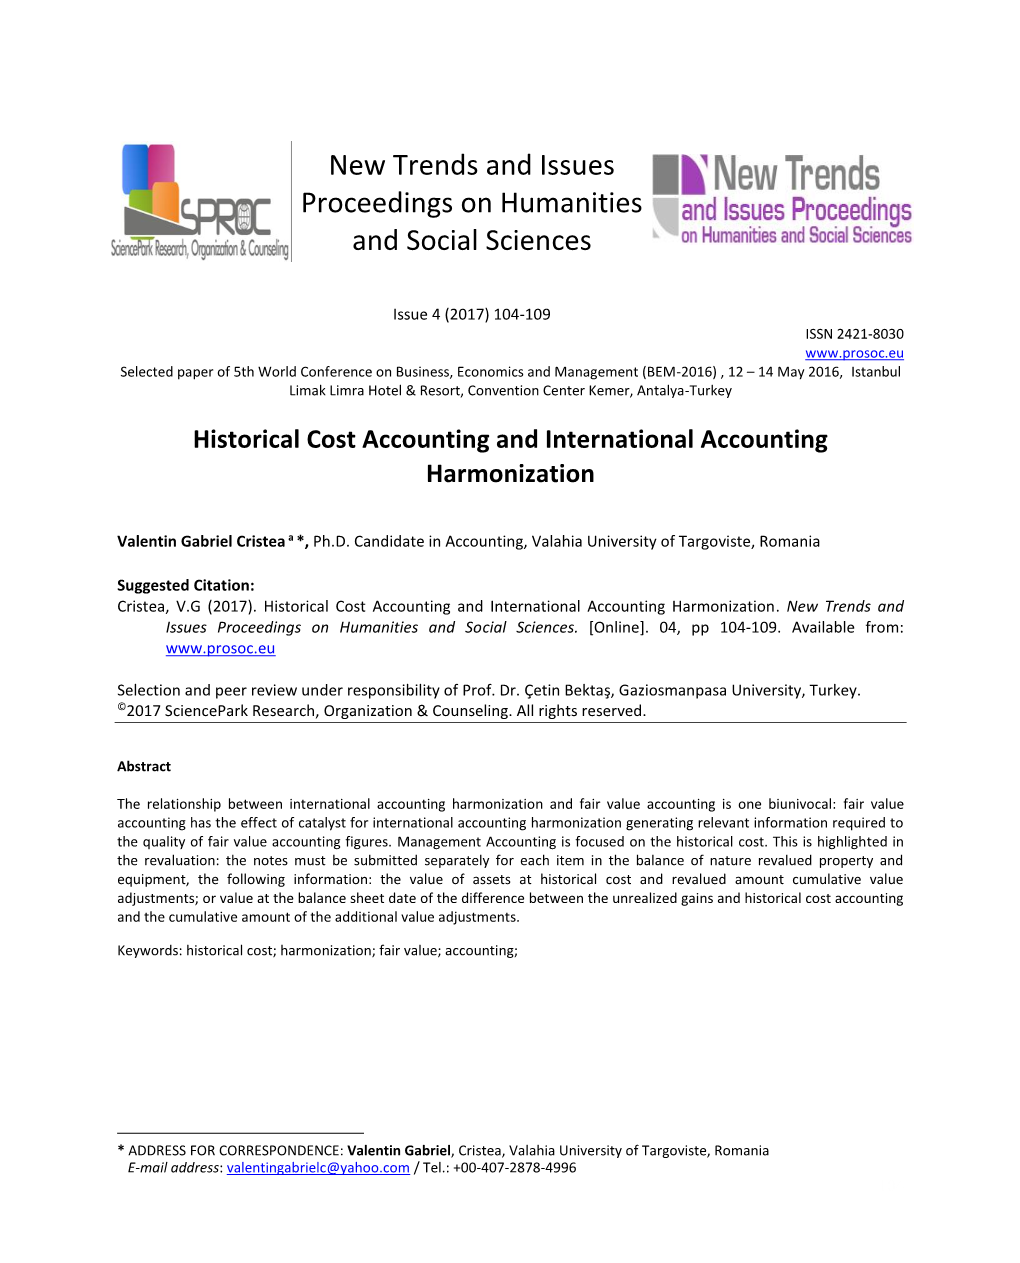 Historical Cost Accounting and International Accounting Harmonization